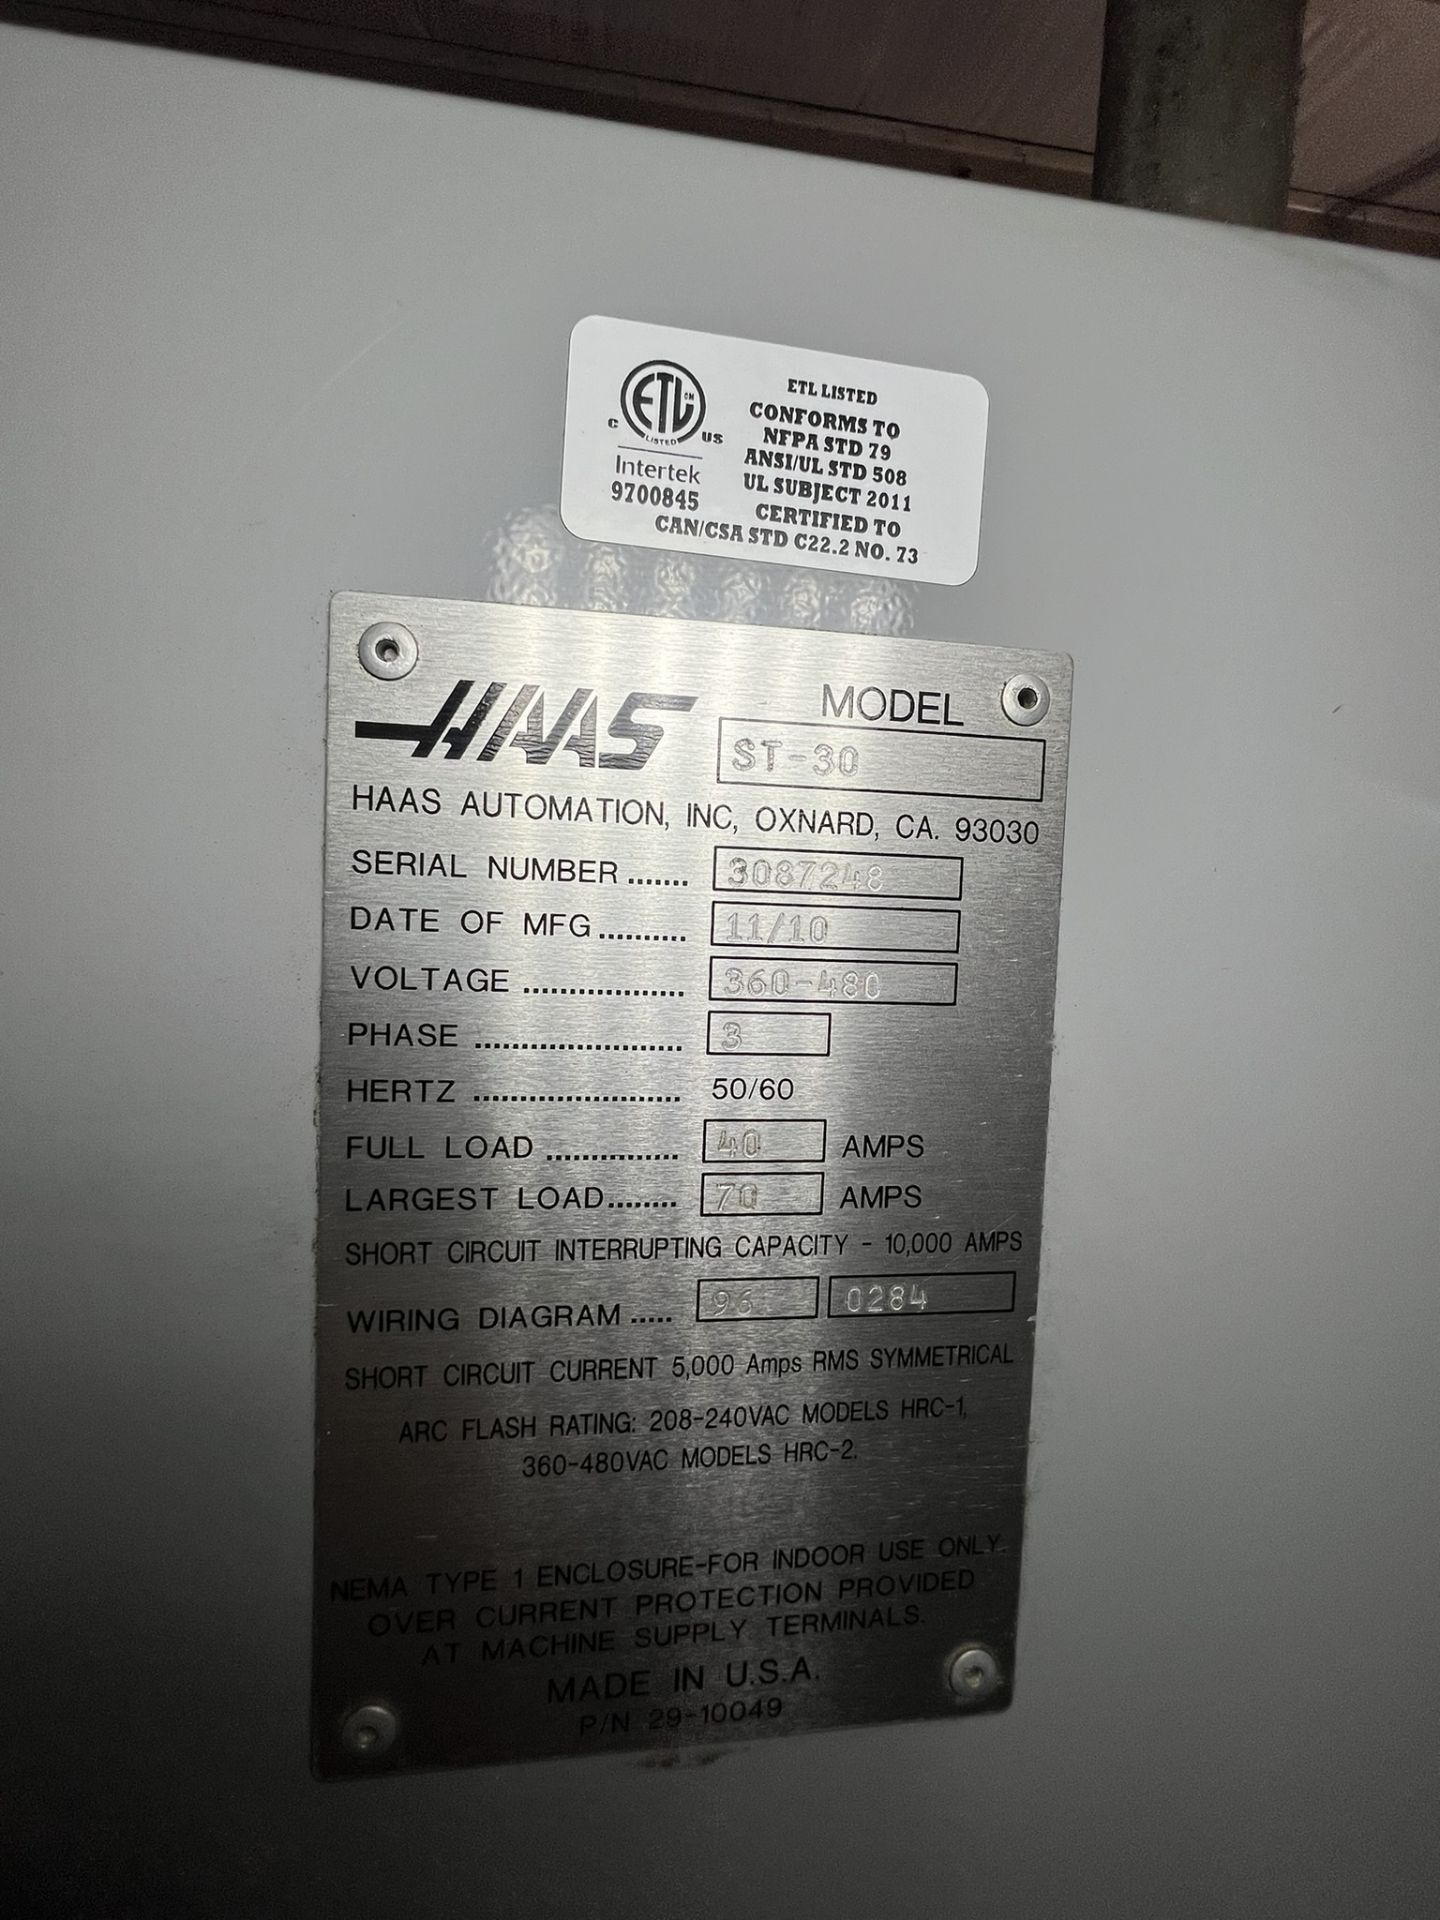 2010 HAAS Model ST30 CNC w/ Jorgensen Conveyor Serial #3087248 - Image 2 of 12